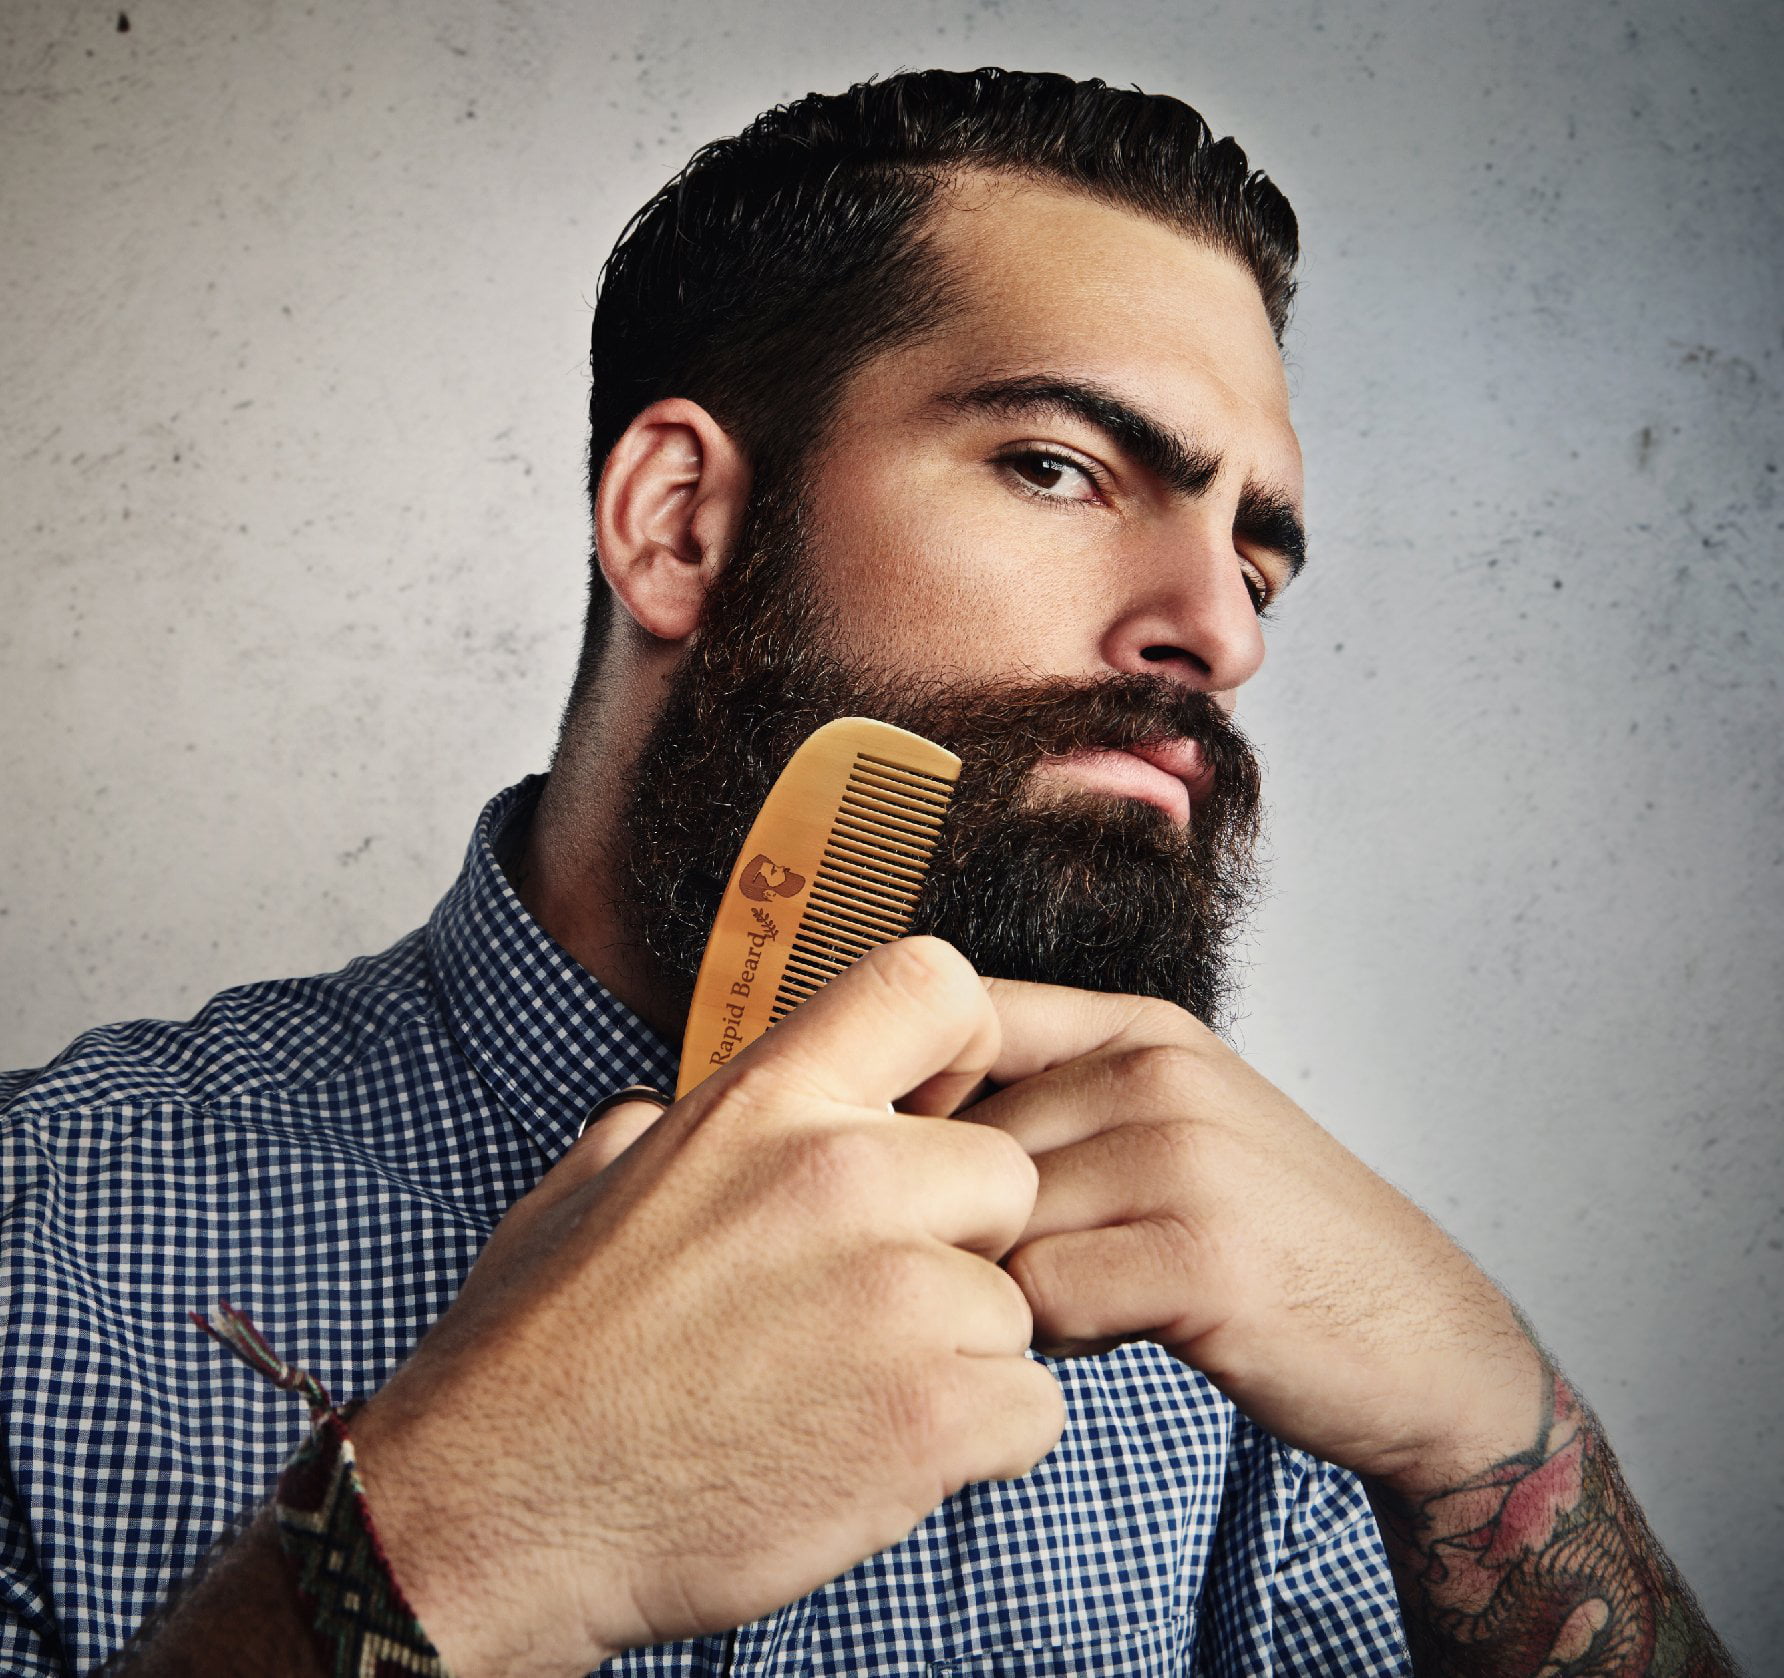 beard grooming & trimming kit for men care